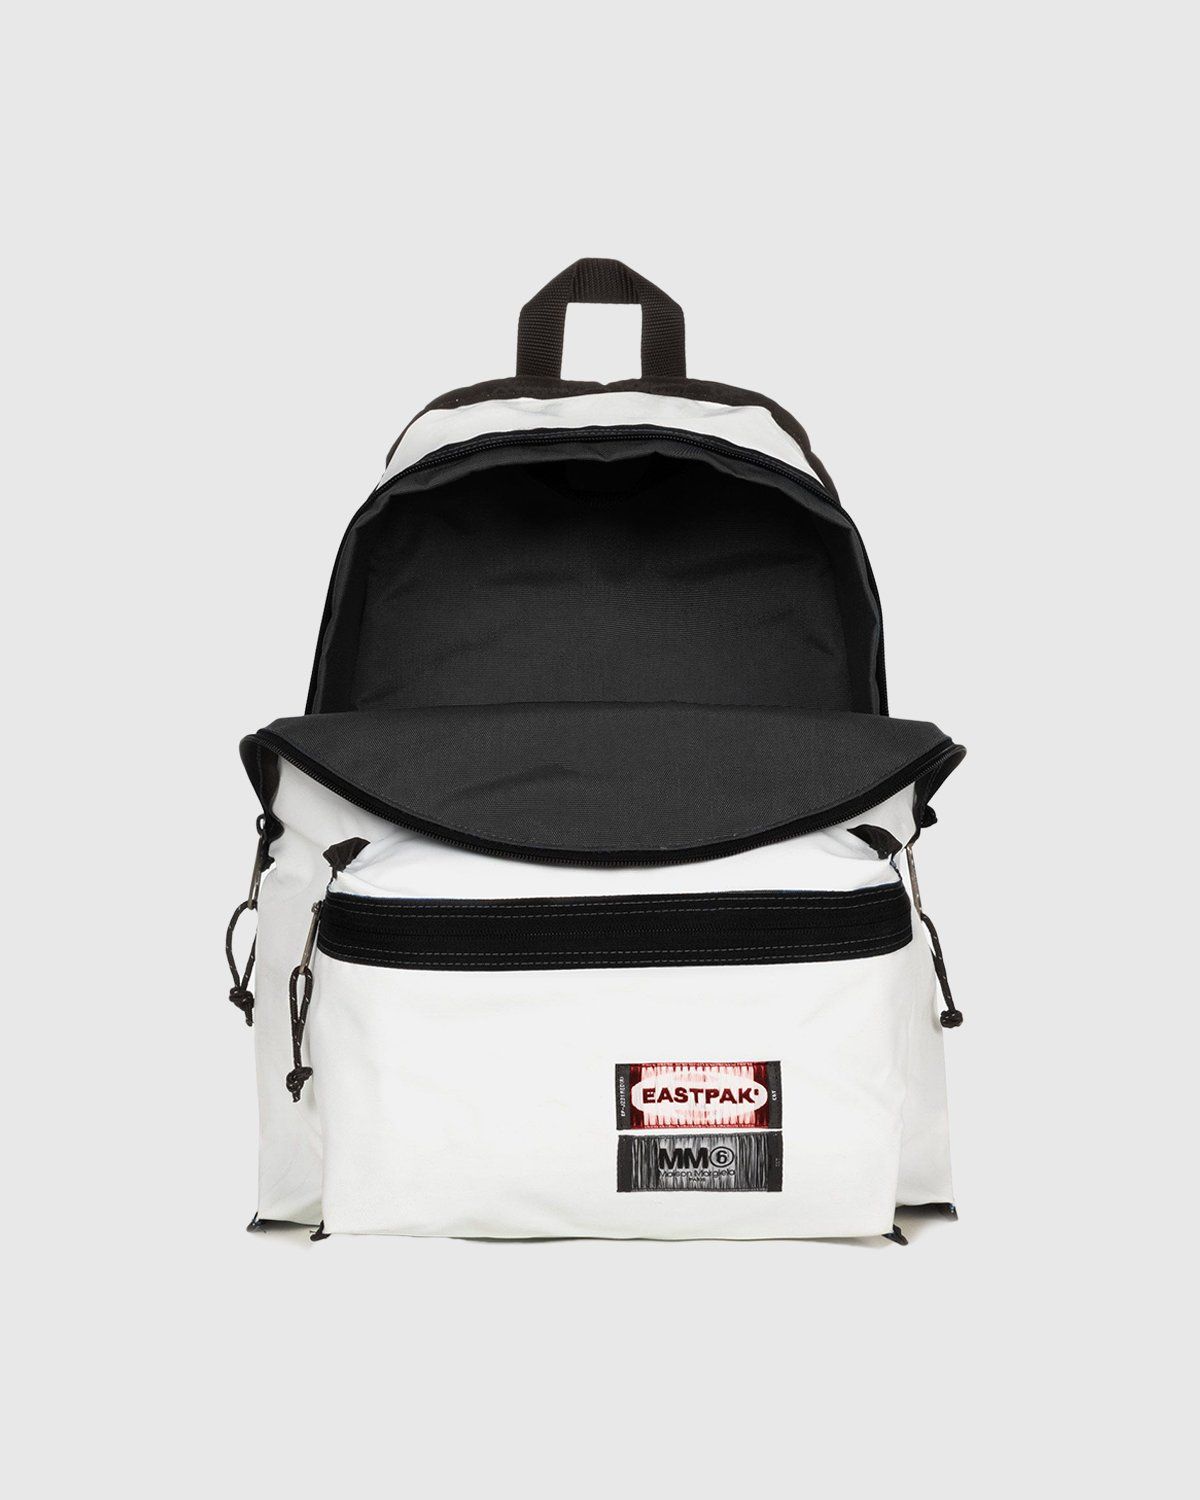 MM6 Maison Margiela x Eastpak – Padded Backpack Black - Bags - Black - Image 5